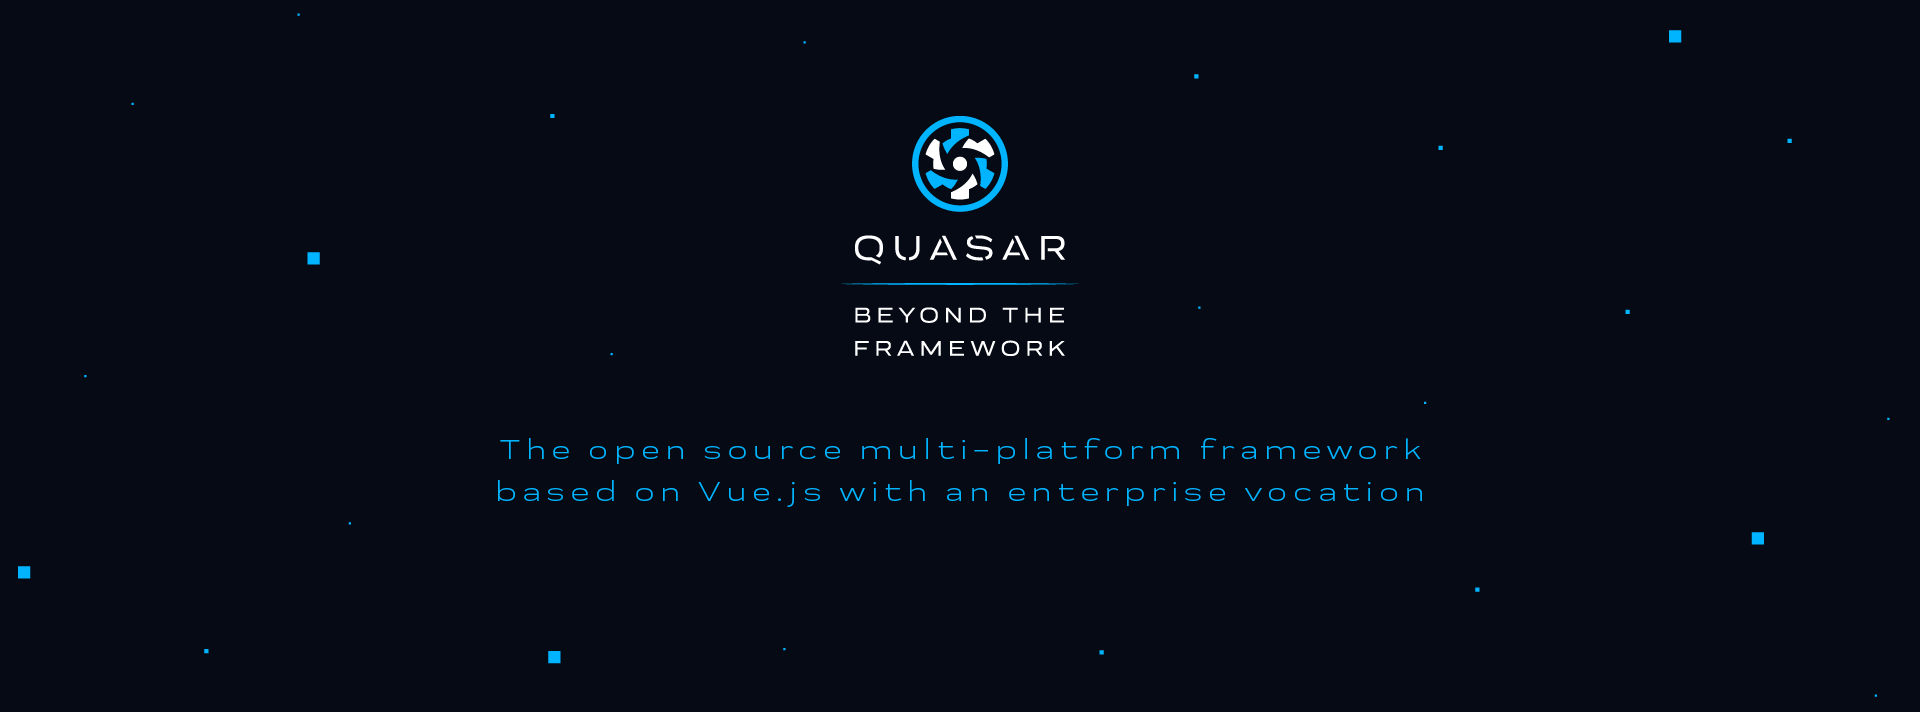 Quasar Framework logo